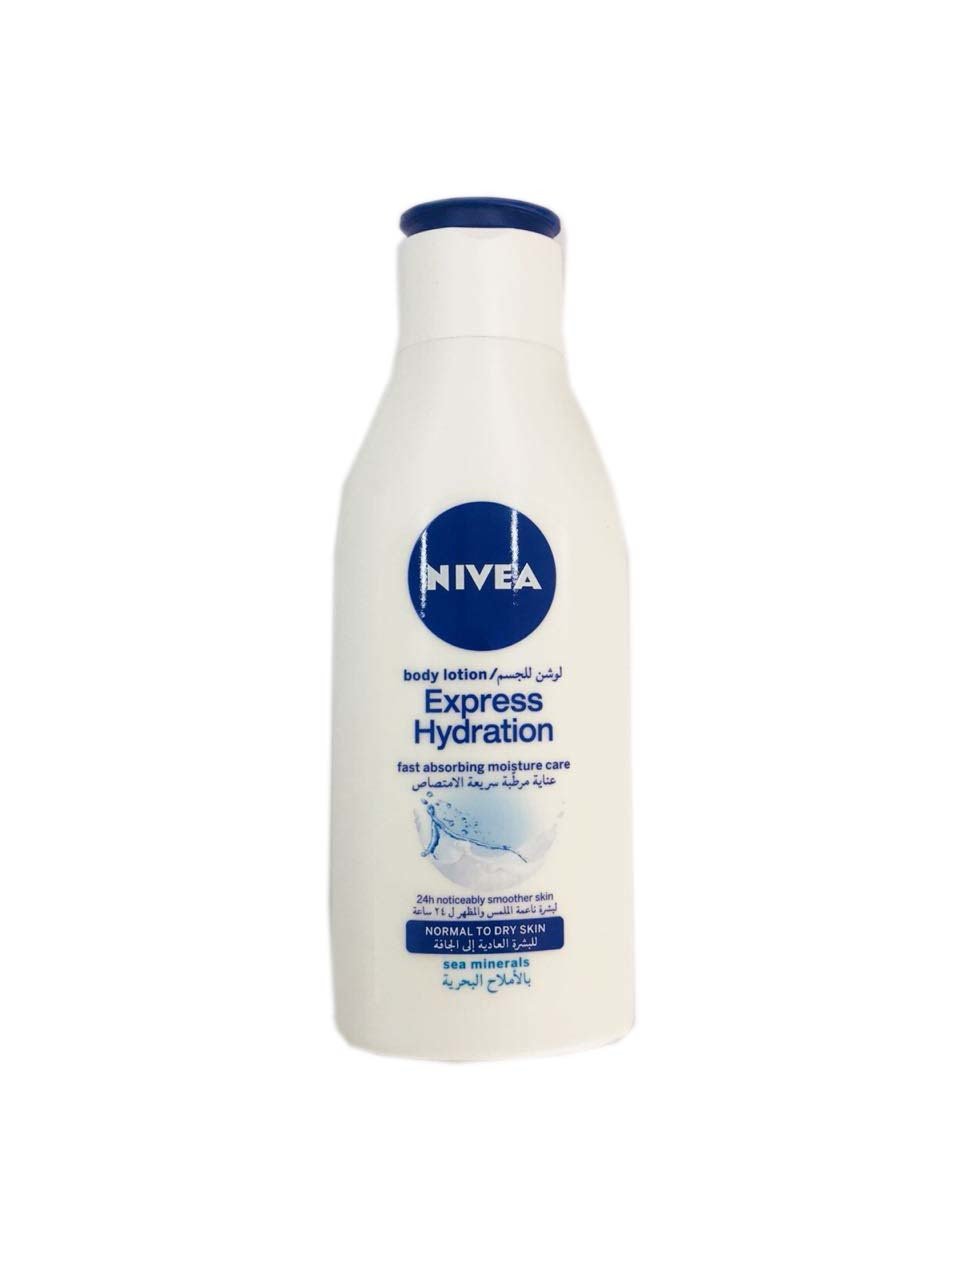 Nivea Express Hydration